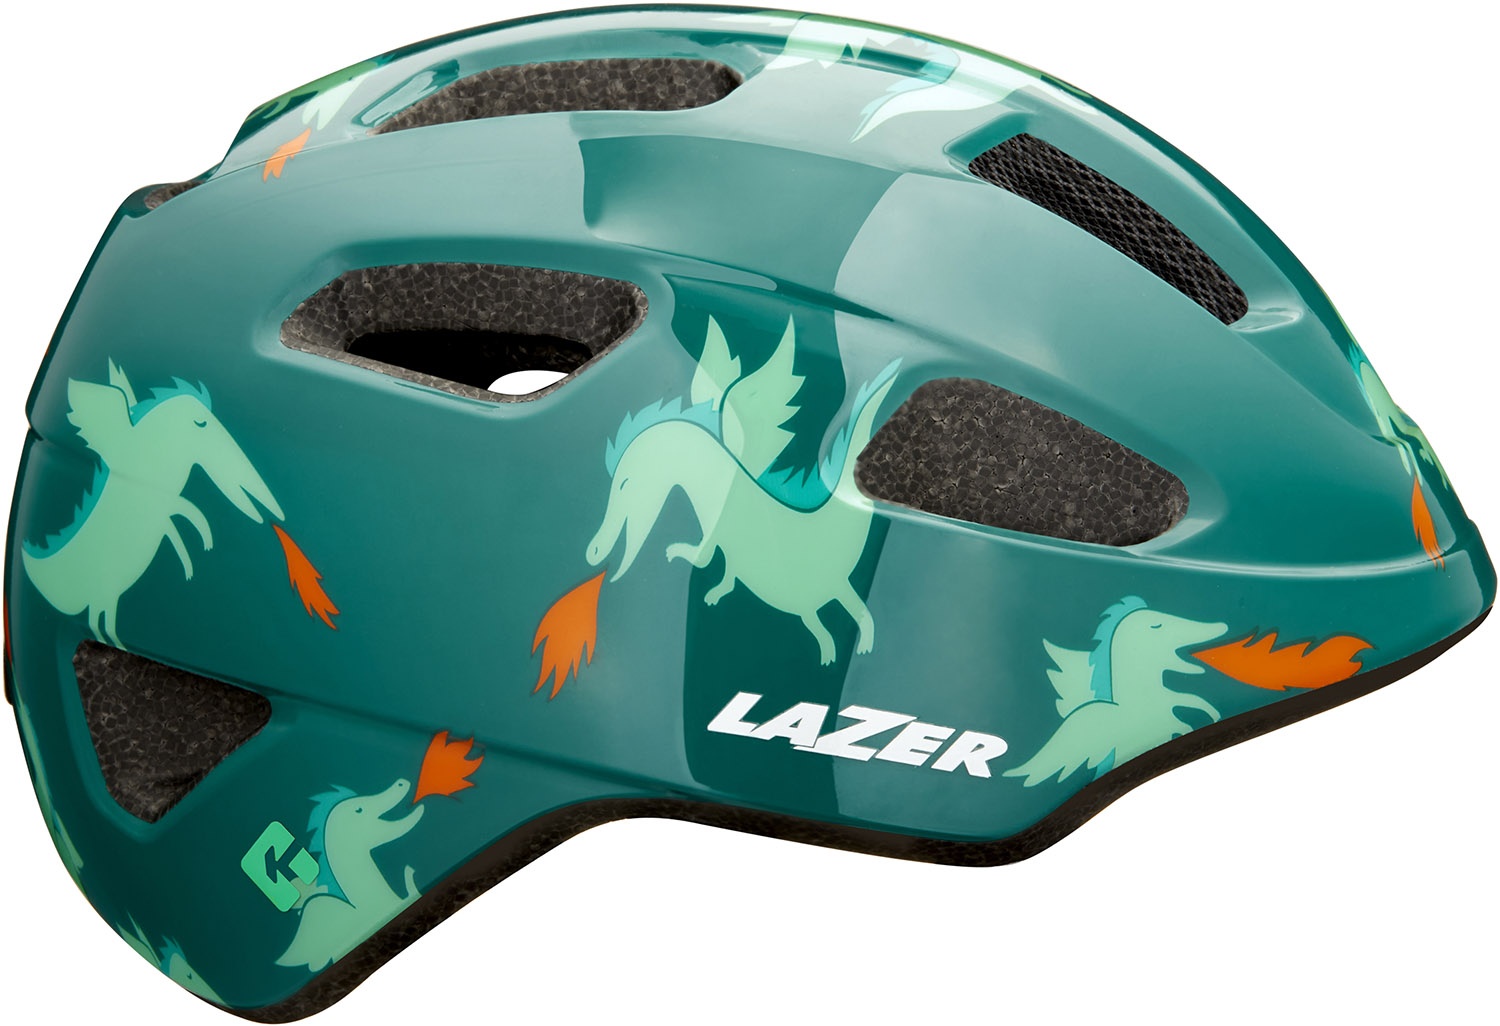 Beklædning - Cykelhjelme - Lazer Nutz Kineticore cykelhjelm - Grøn